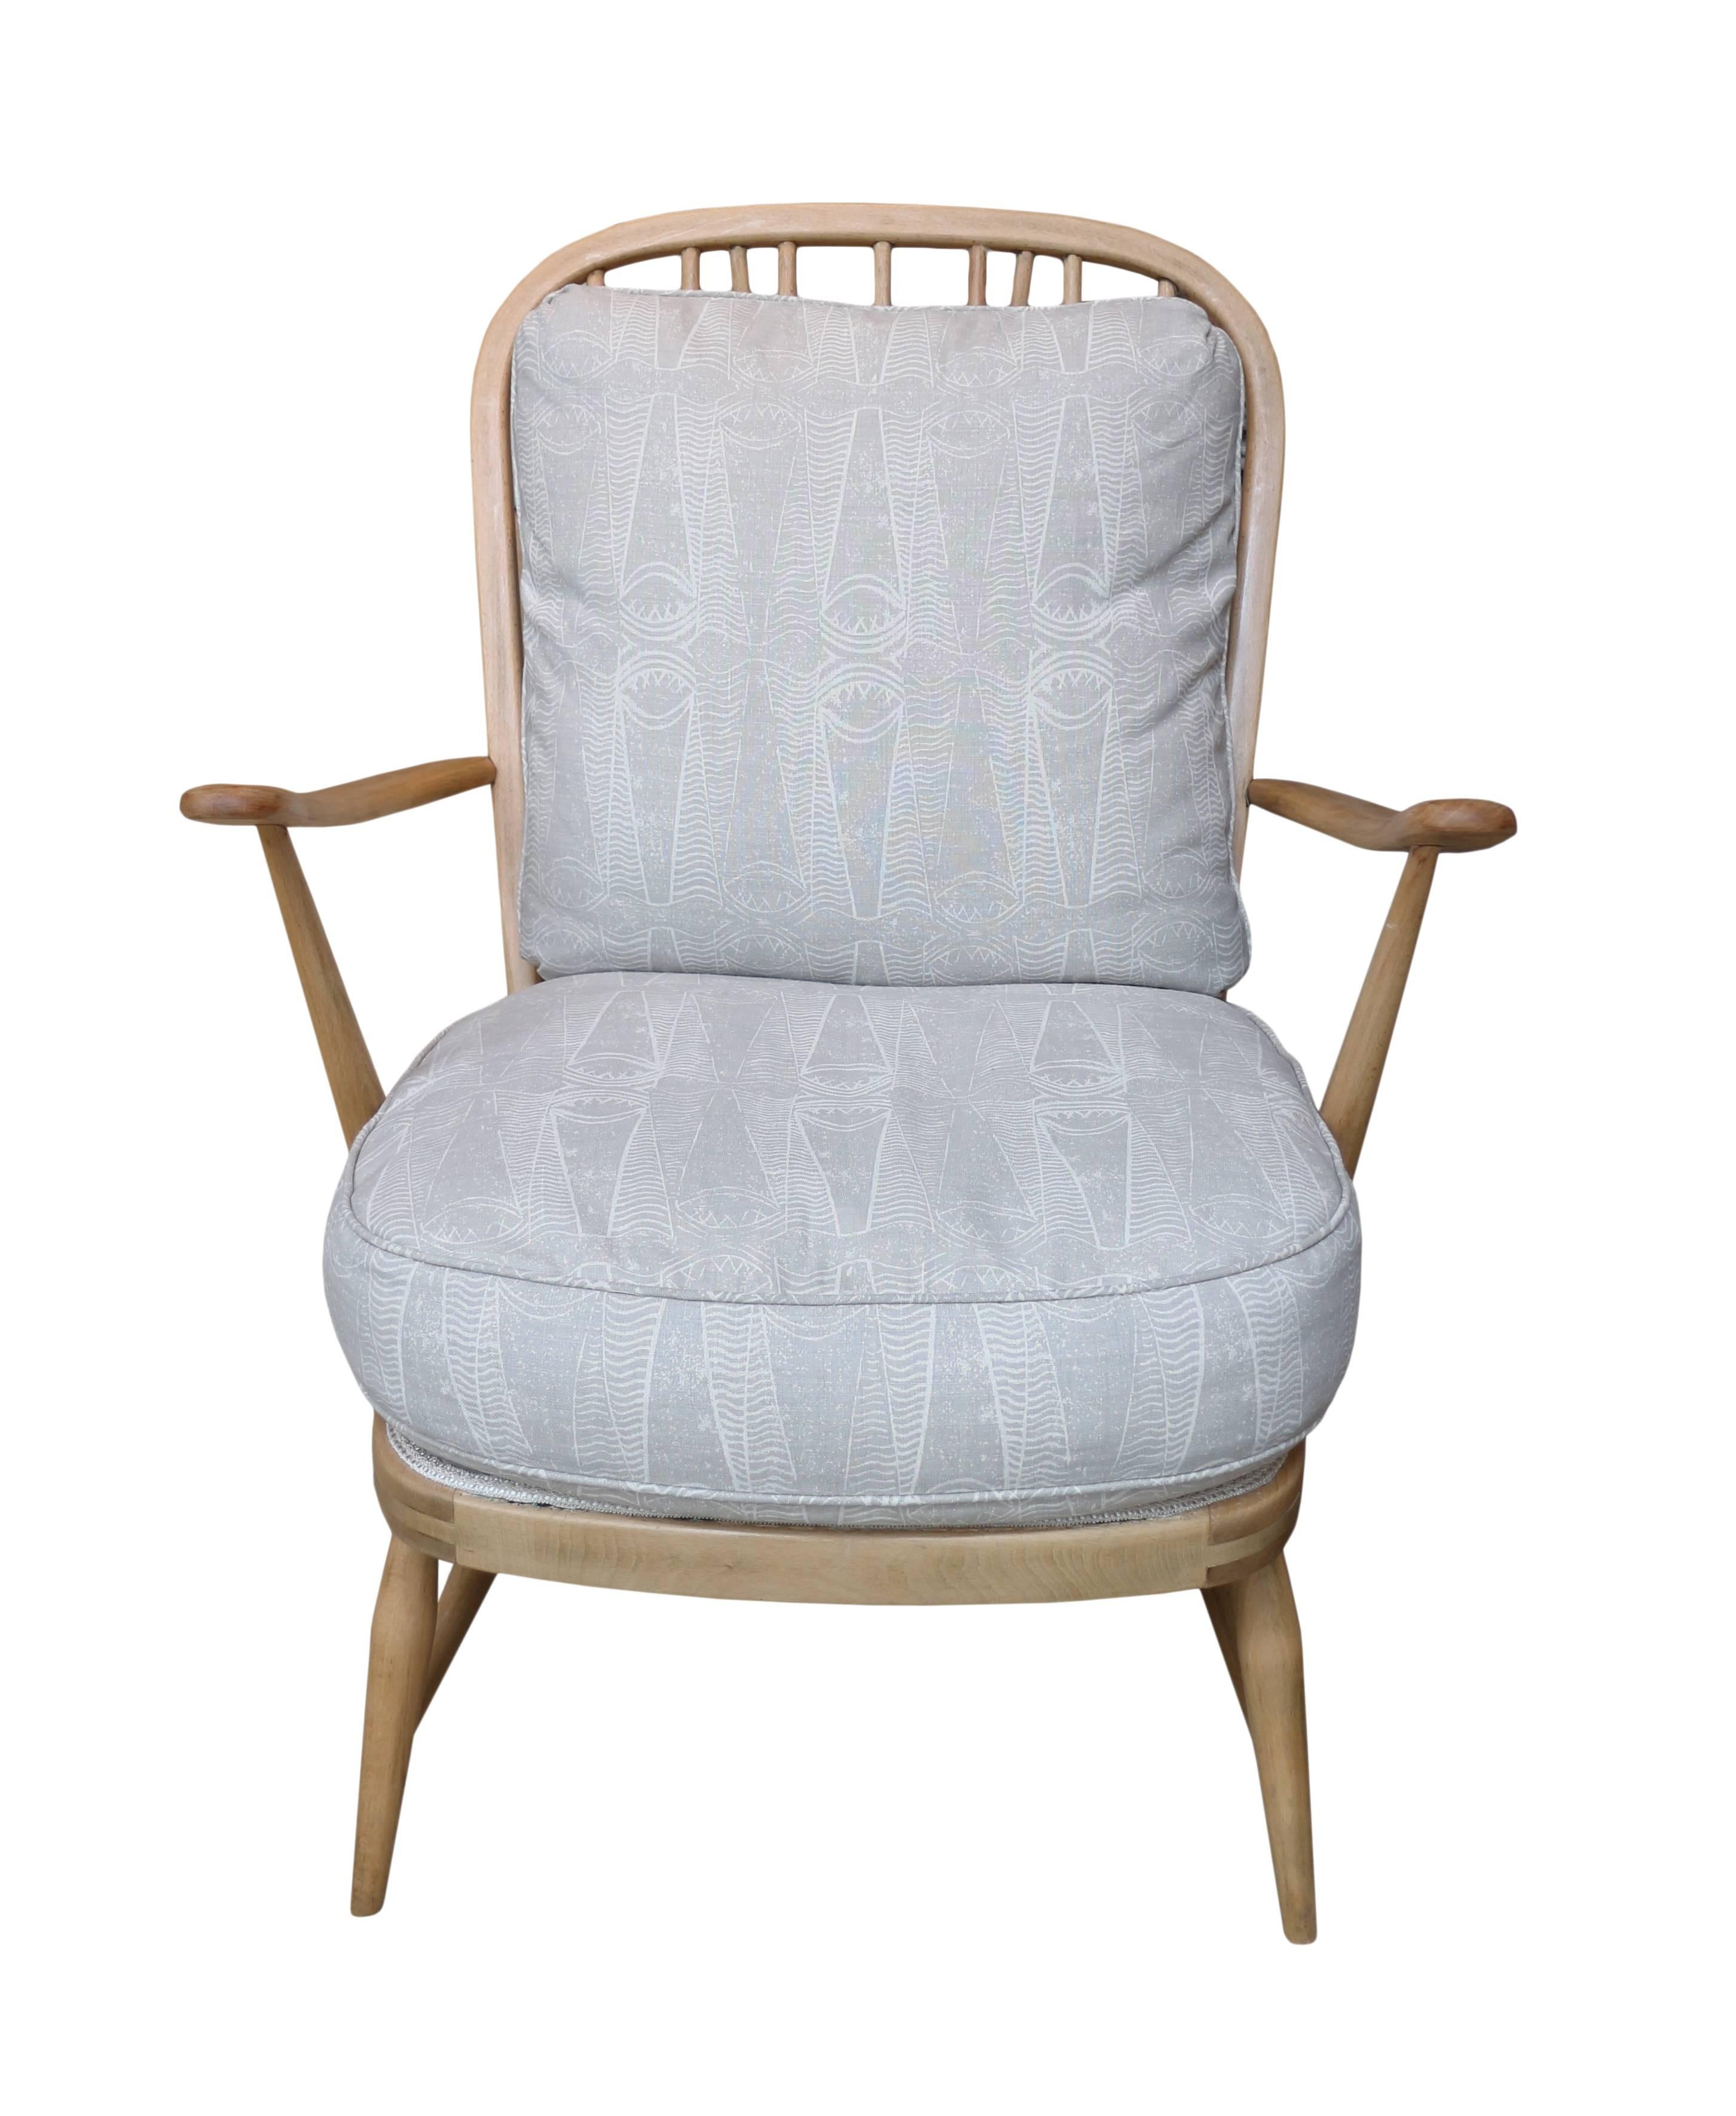 Pair of vintage armchairs
Upholstered in virginia white - sompting, grey goose
Measure: Seat height 17